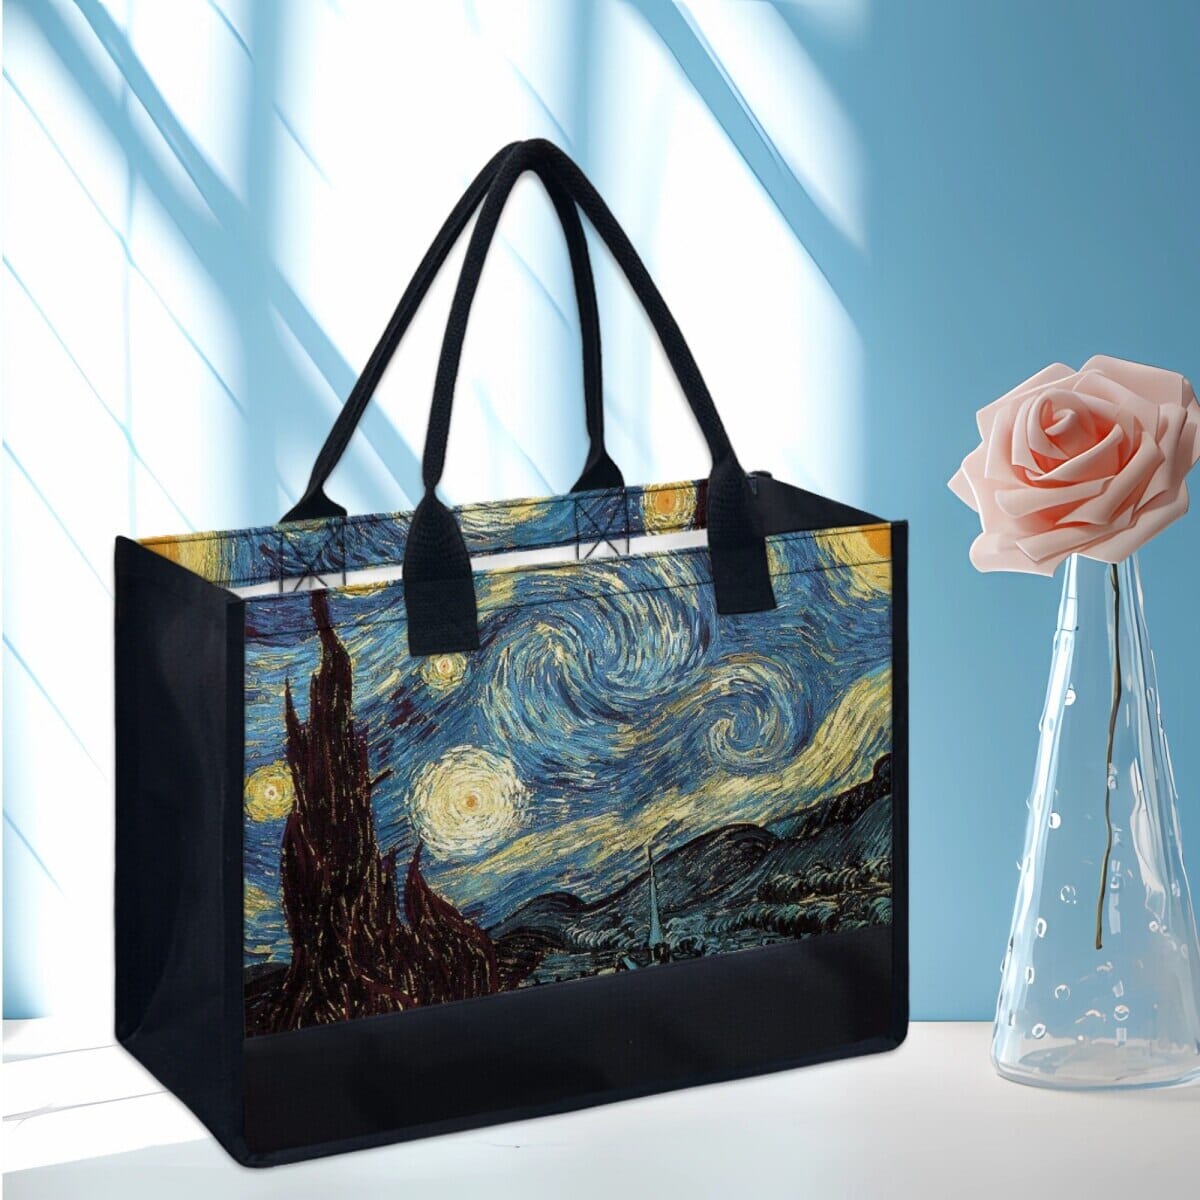 Van Gogh Starry Night Oil Painting Designer Tote Bag for Women Travel Party Beach Canvas Bag Halloween Christmas Gift Handbags 0 GatoGeek Z9820BZ69 